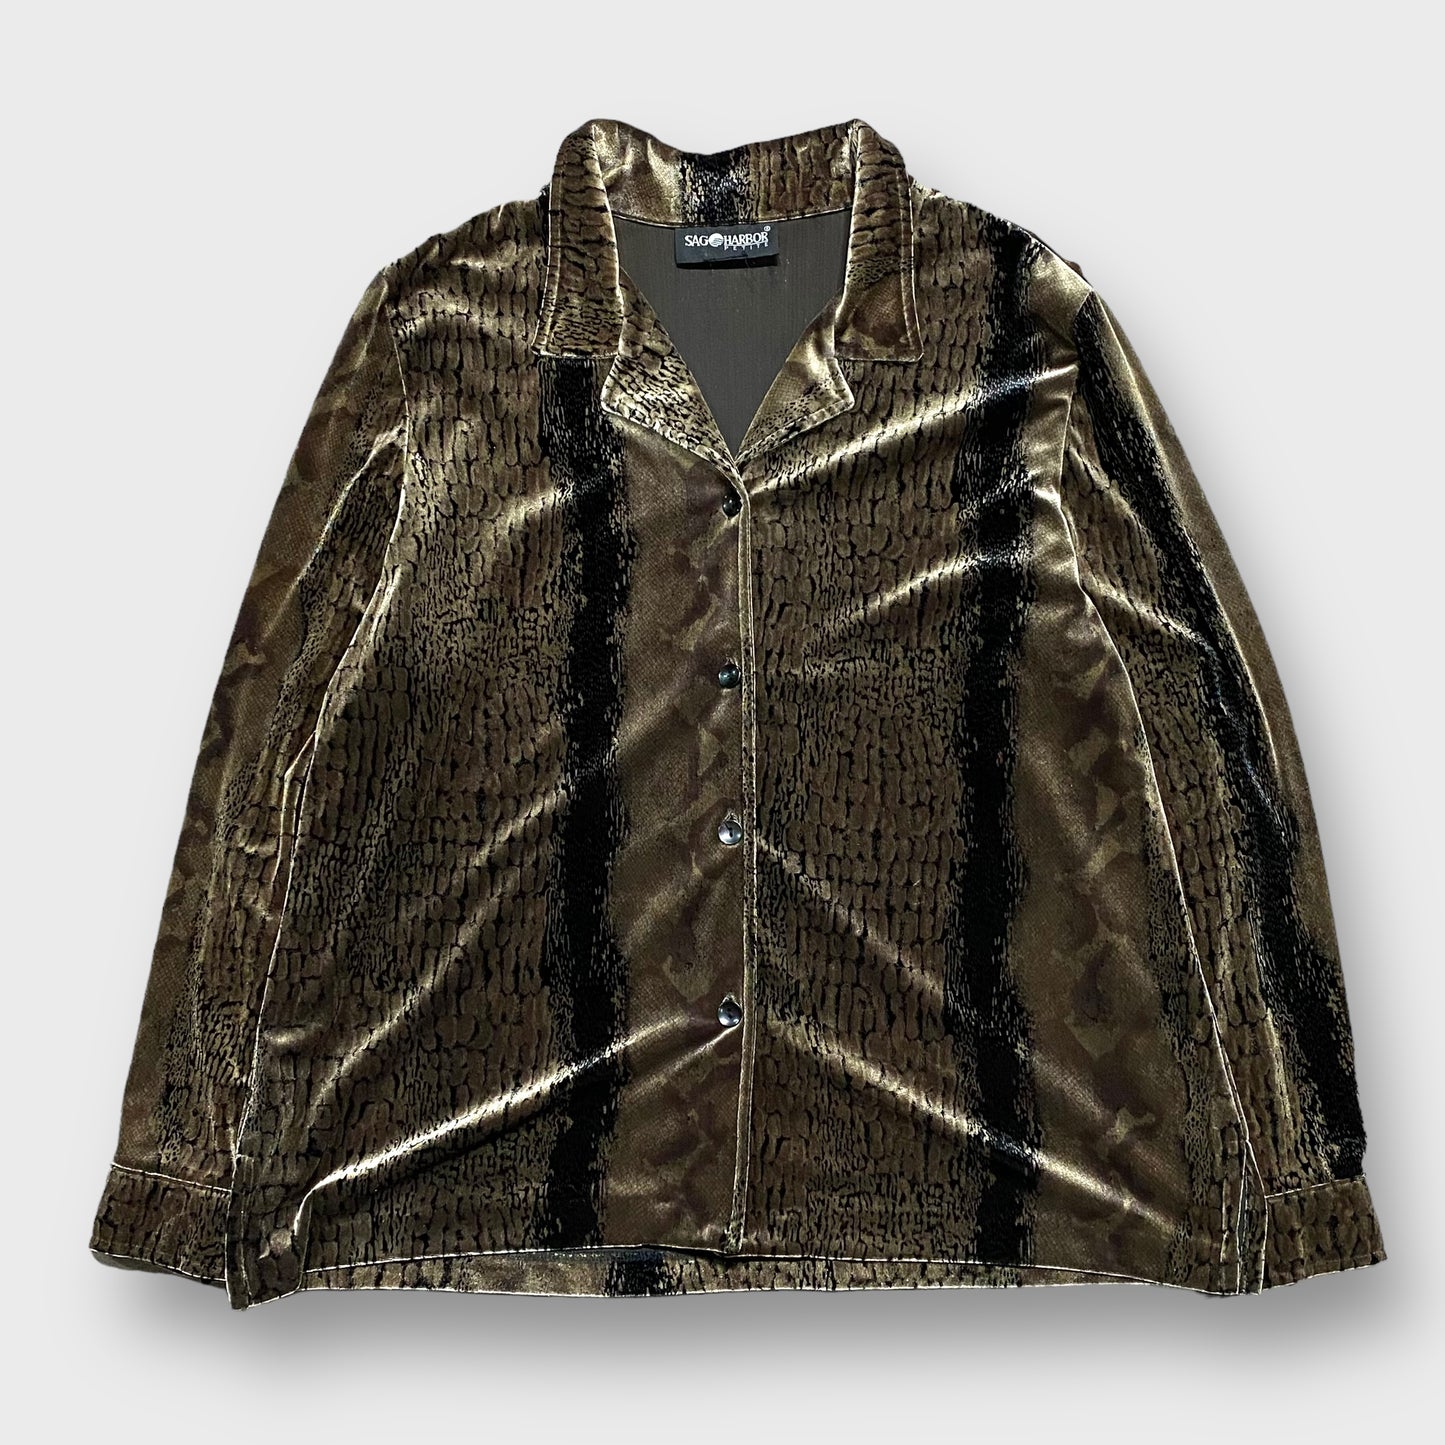 90's "SAG HARBOR" Python pattern velour shirt